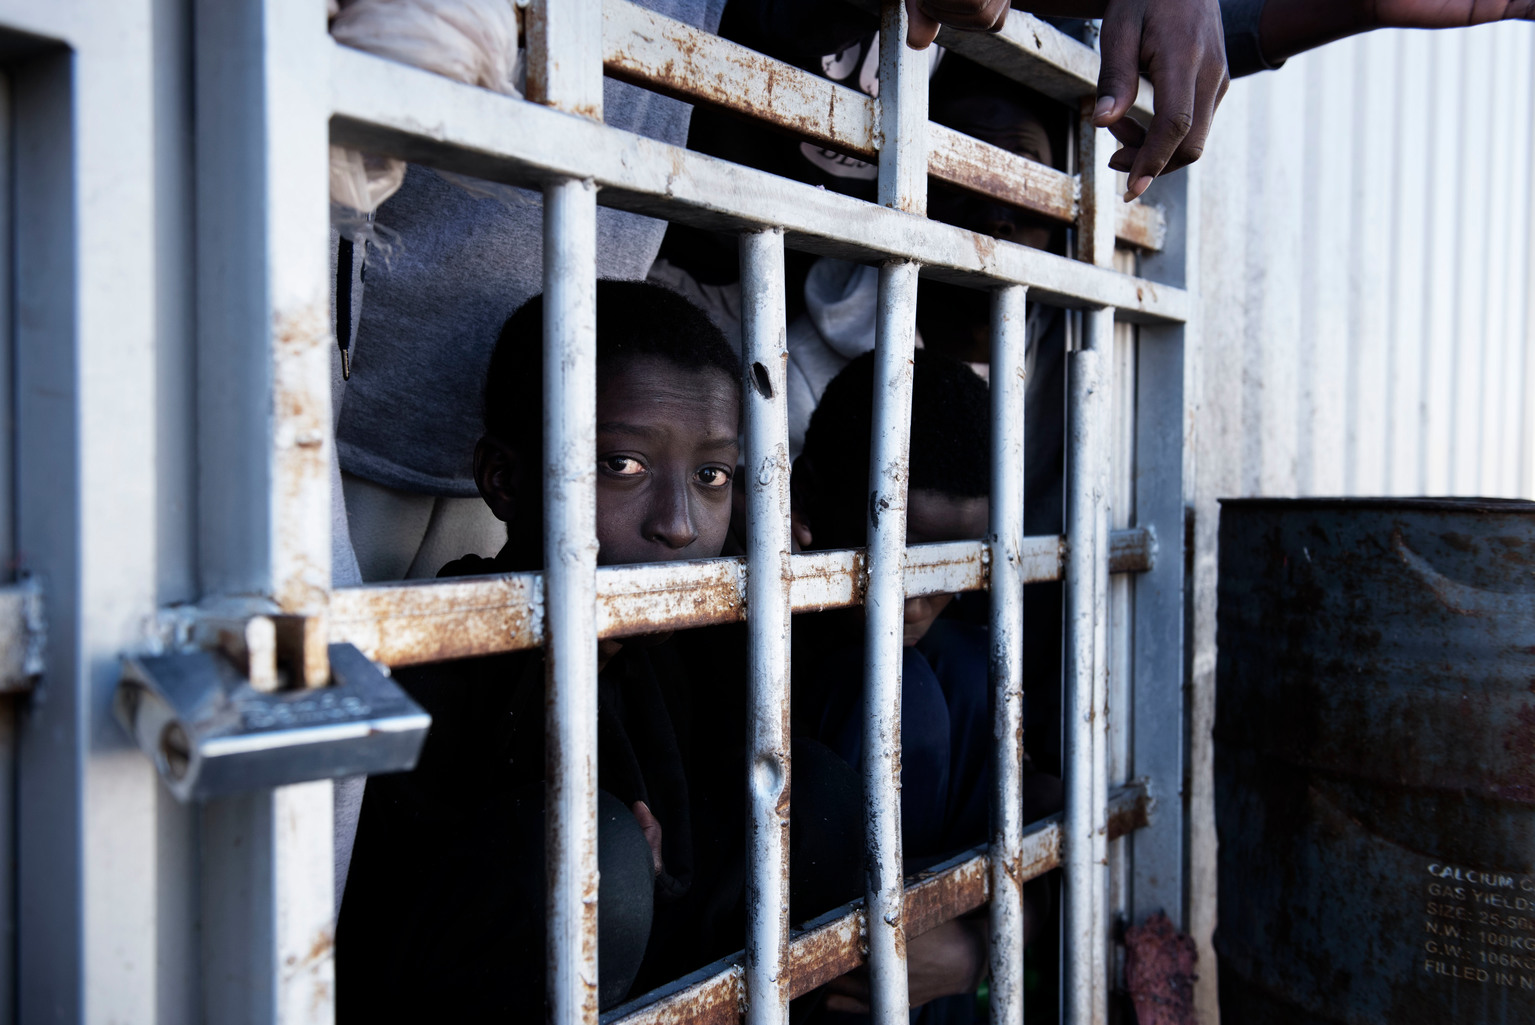 Libya detention